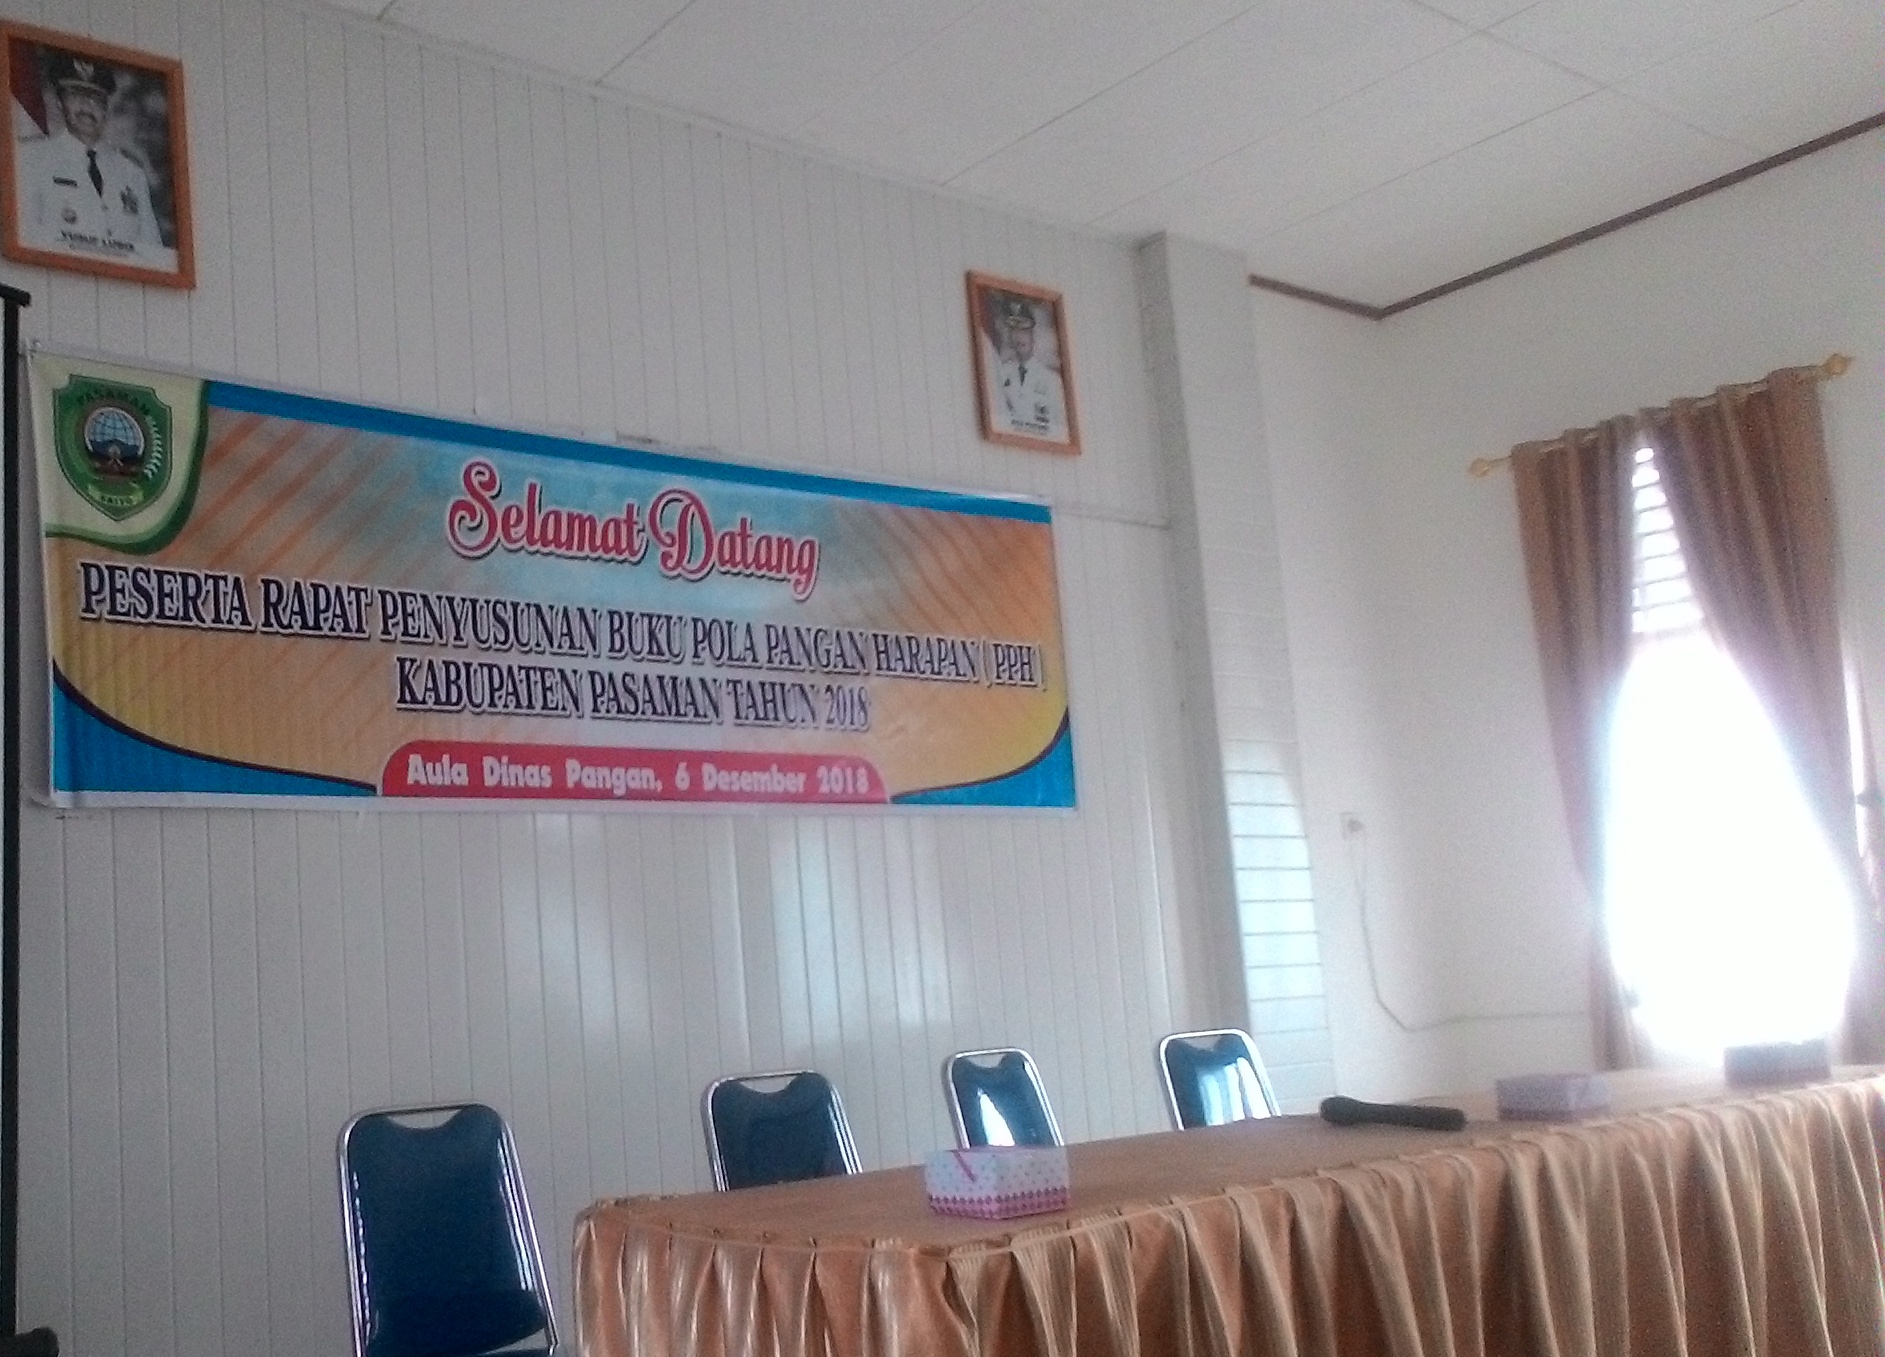 Pertemuan Penyusunan Buku Pola Pangan Harapan (PPH) Kabupaten Pasaman Tahun 2018